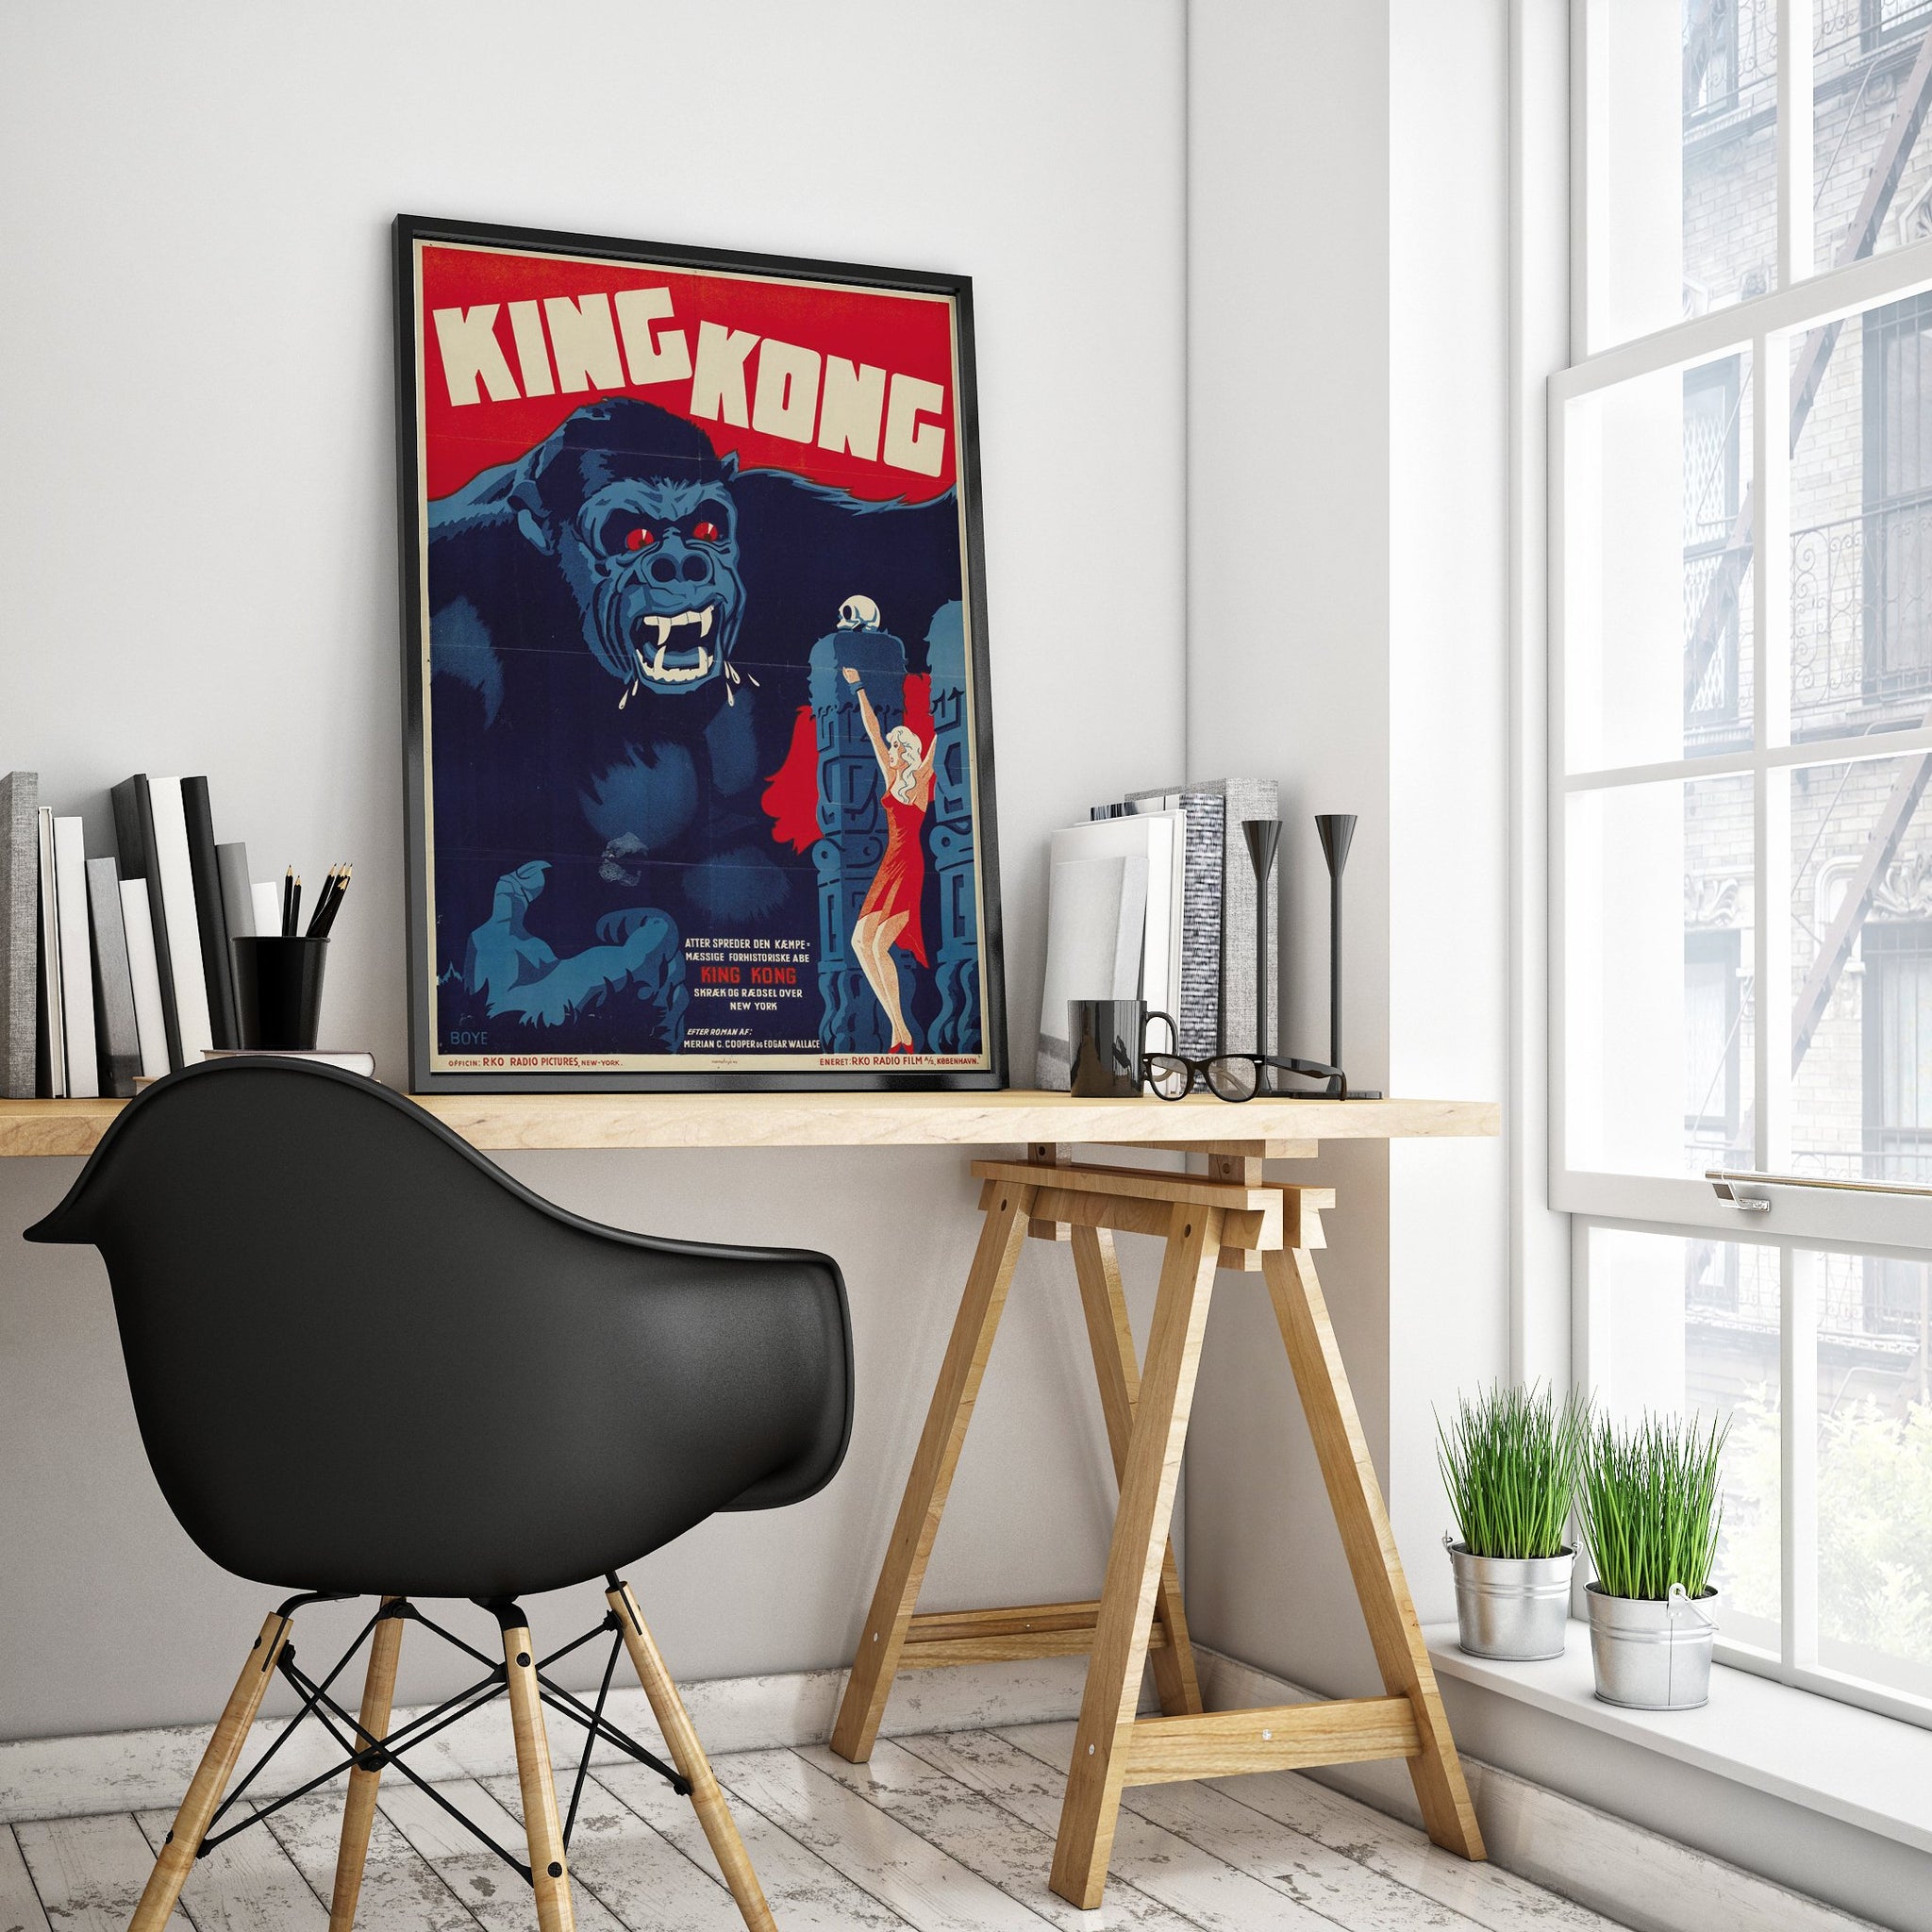 King Kong Classic Movie Premium Poster - Team Spirit Store USA 